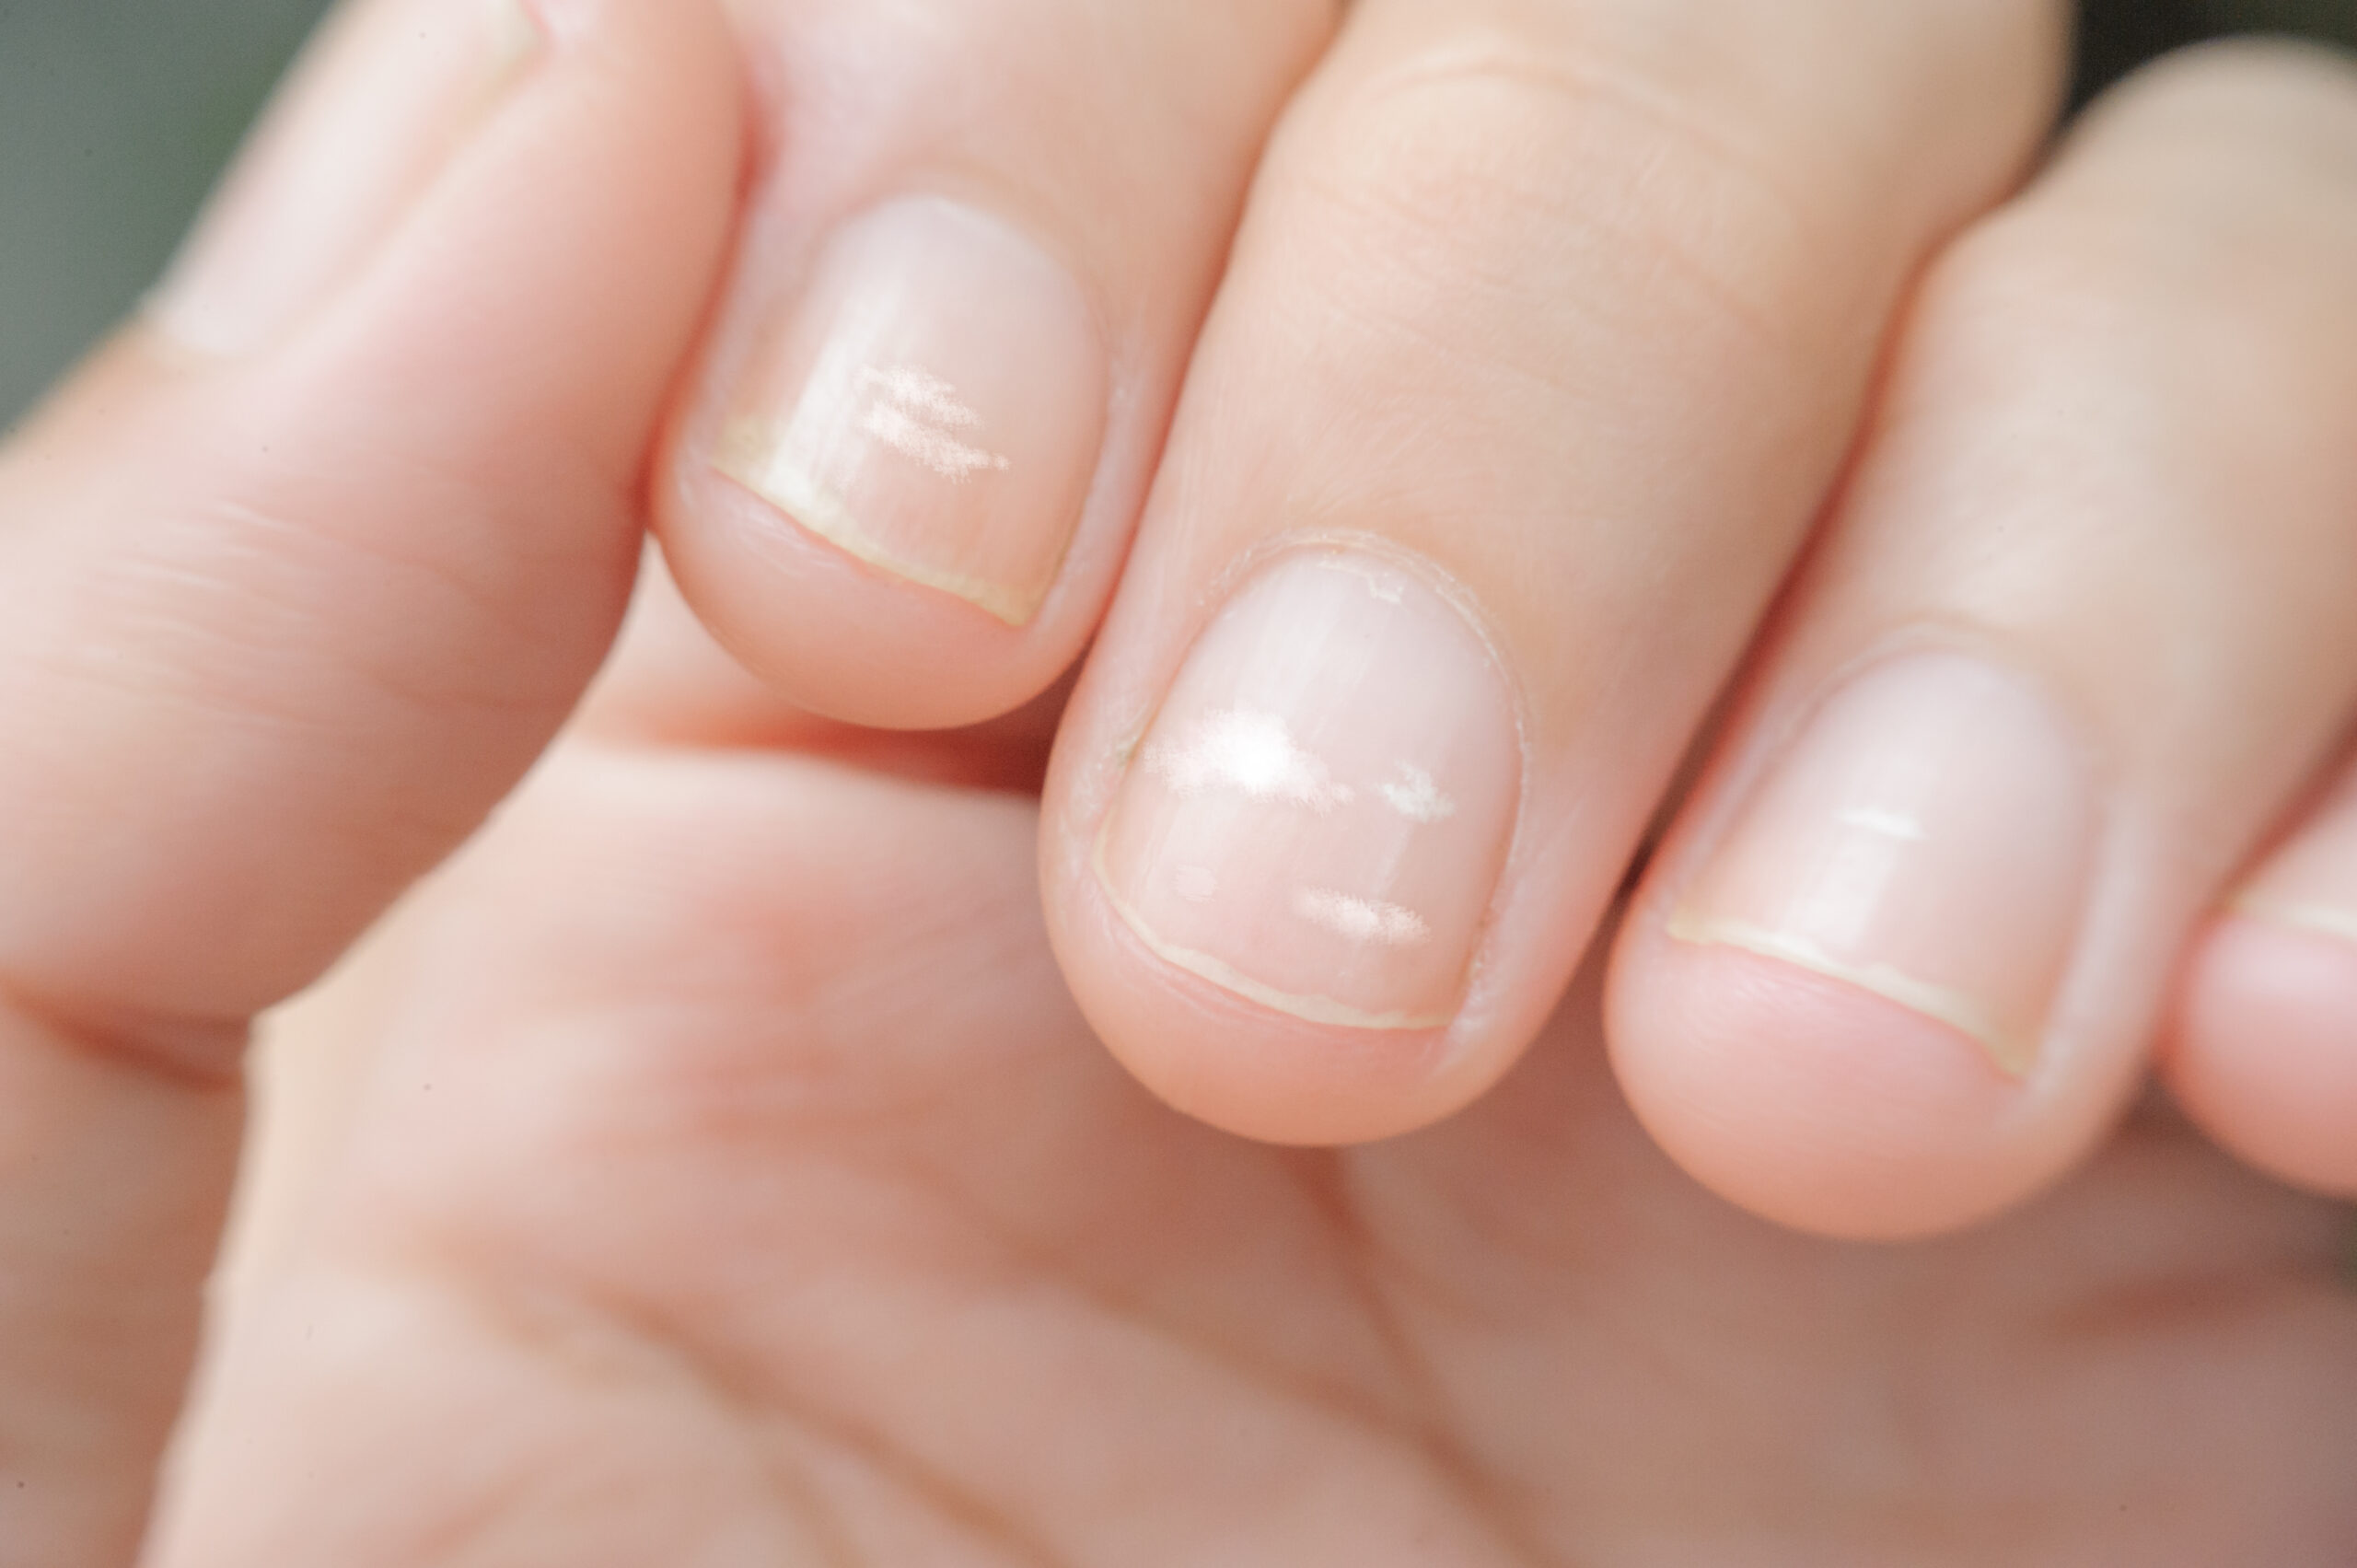 Blue Nails Disease: Causes, Symptoms, and More - HealthKart